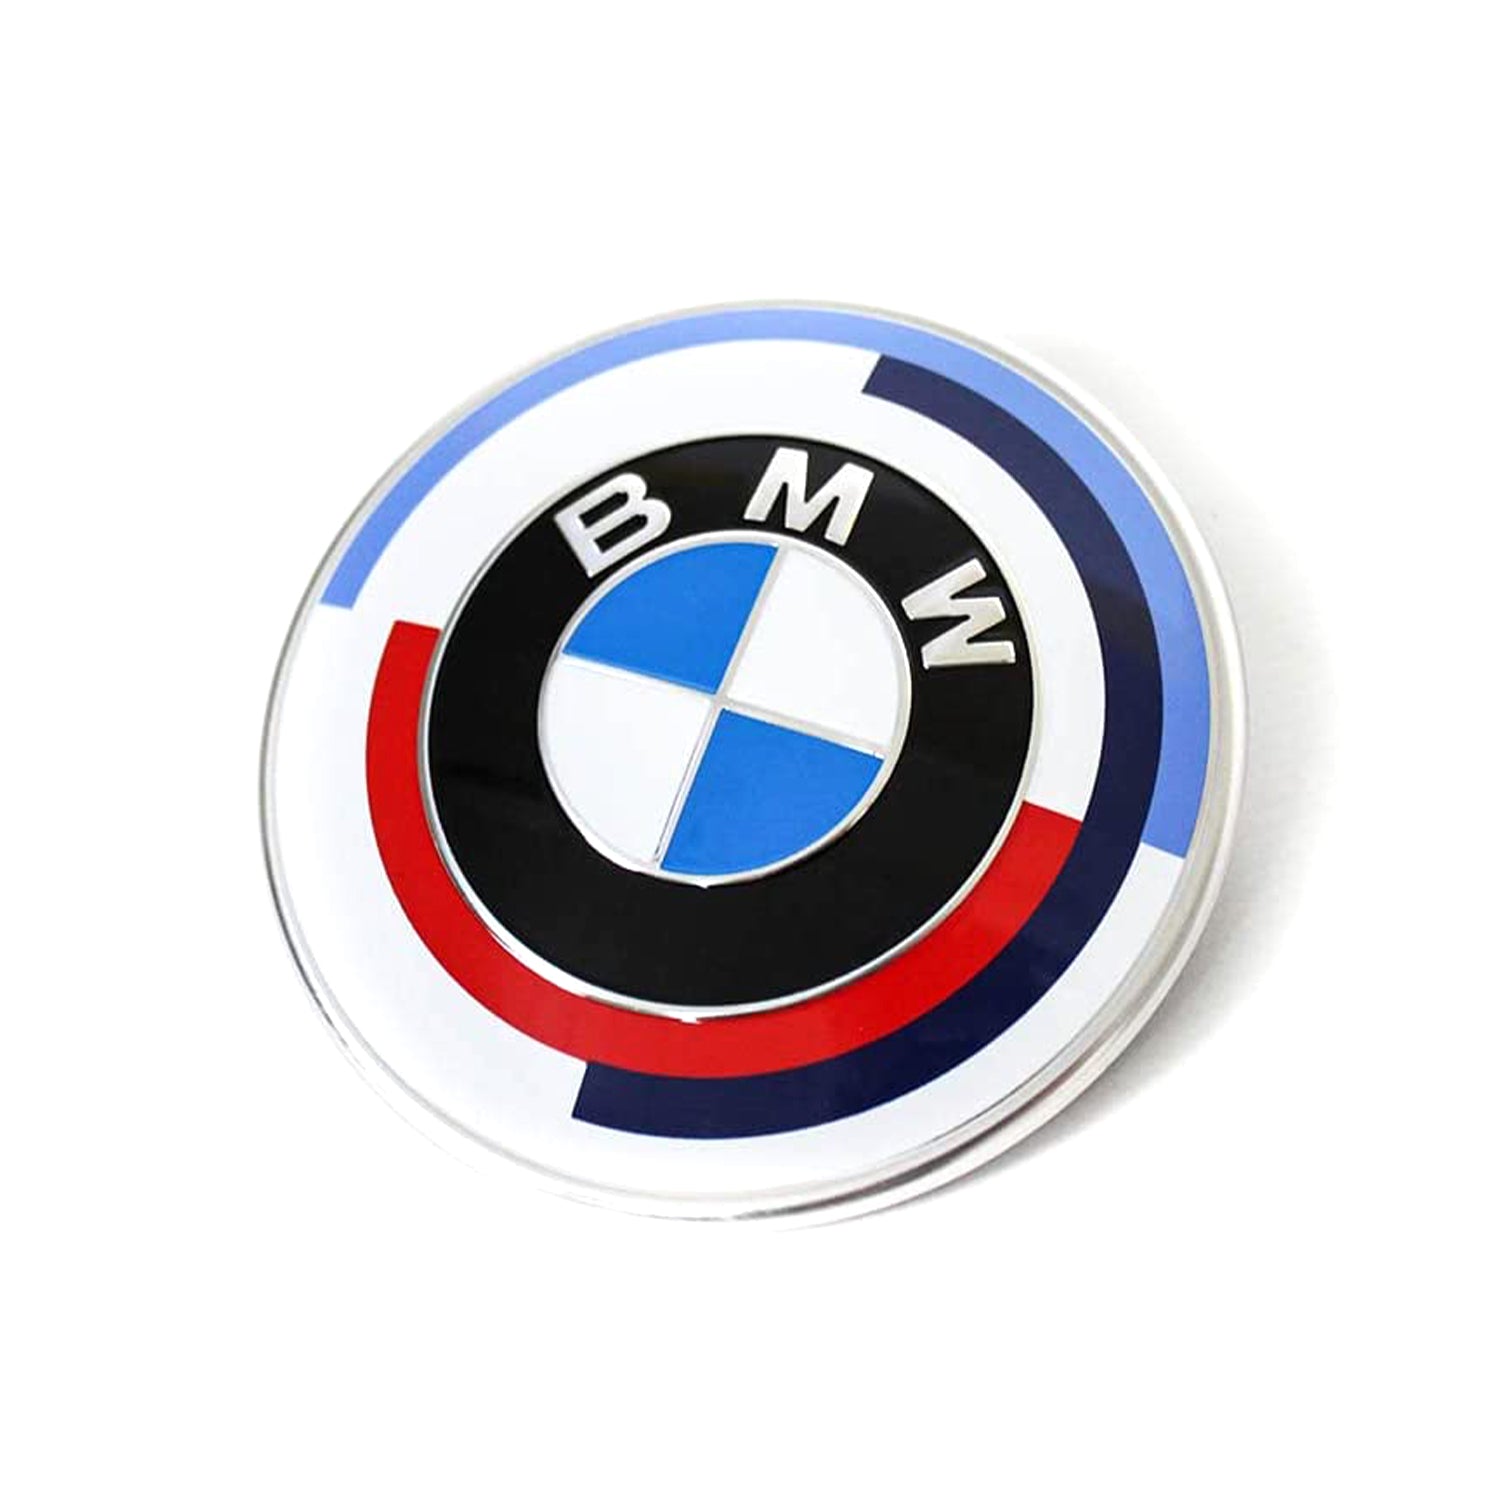 Genuine BMW E46 M3 50 Year Anniversary Heritage Rear Badge